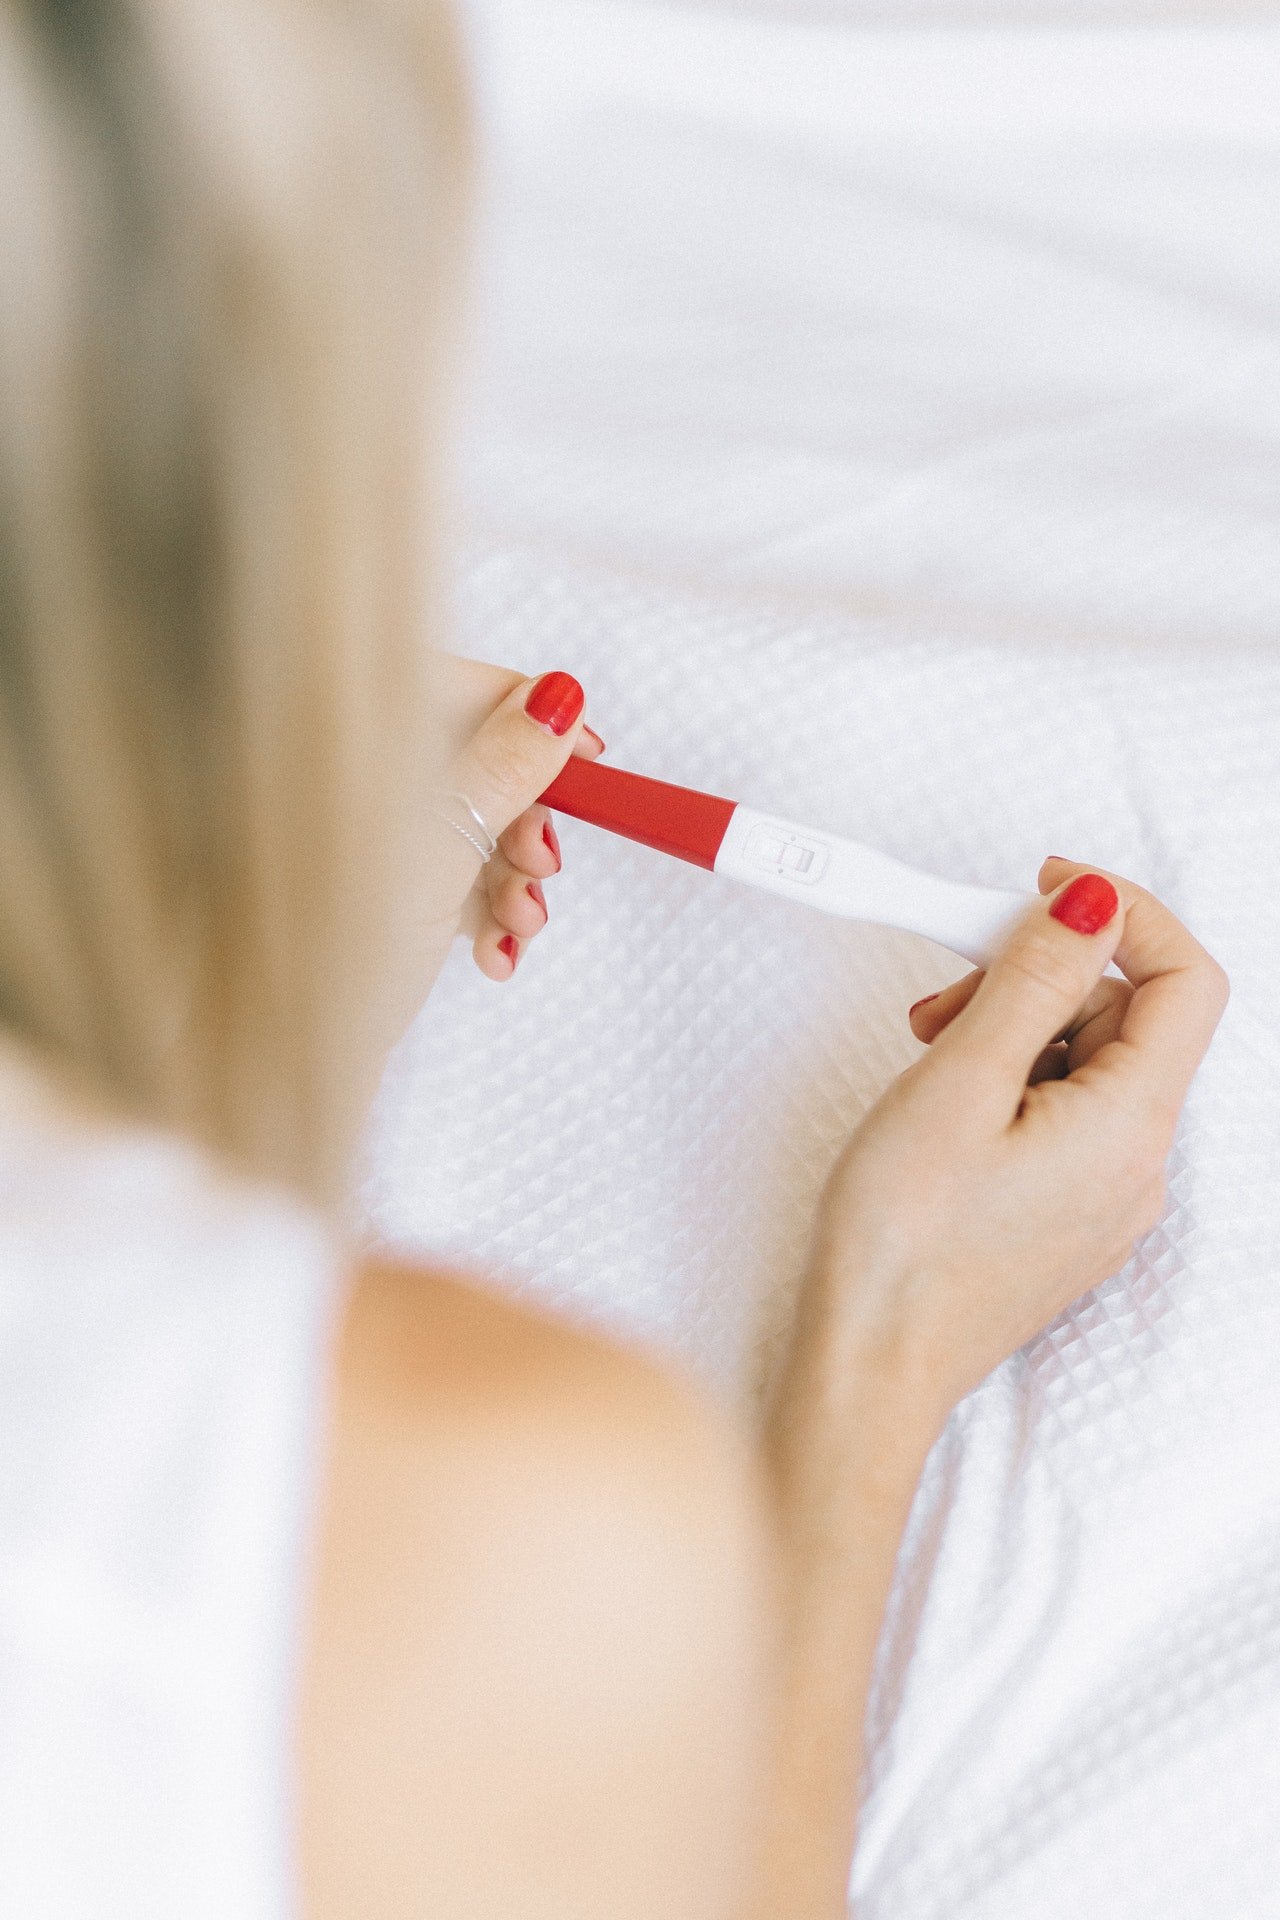 Mujer sosteniendo test de embarazo. | Foto: Pexels